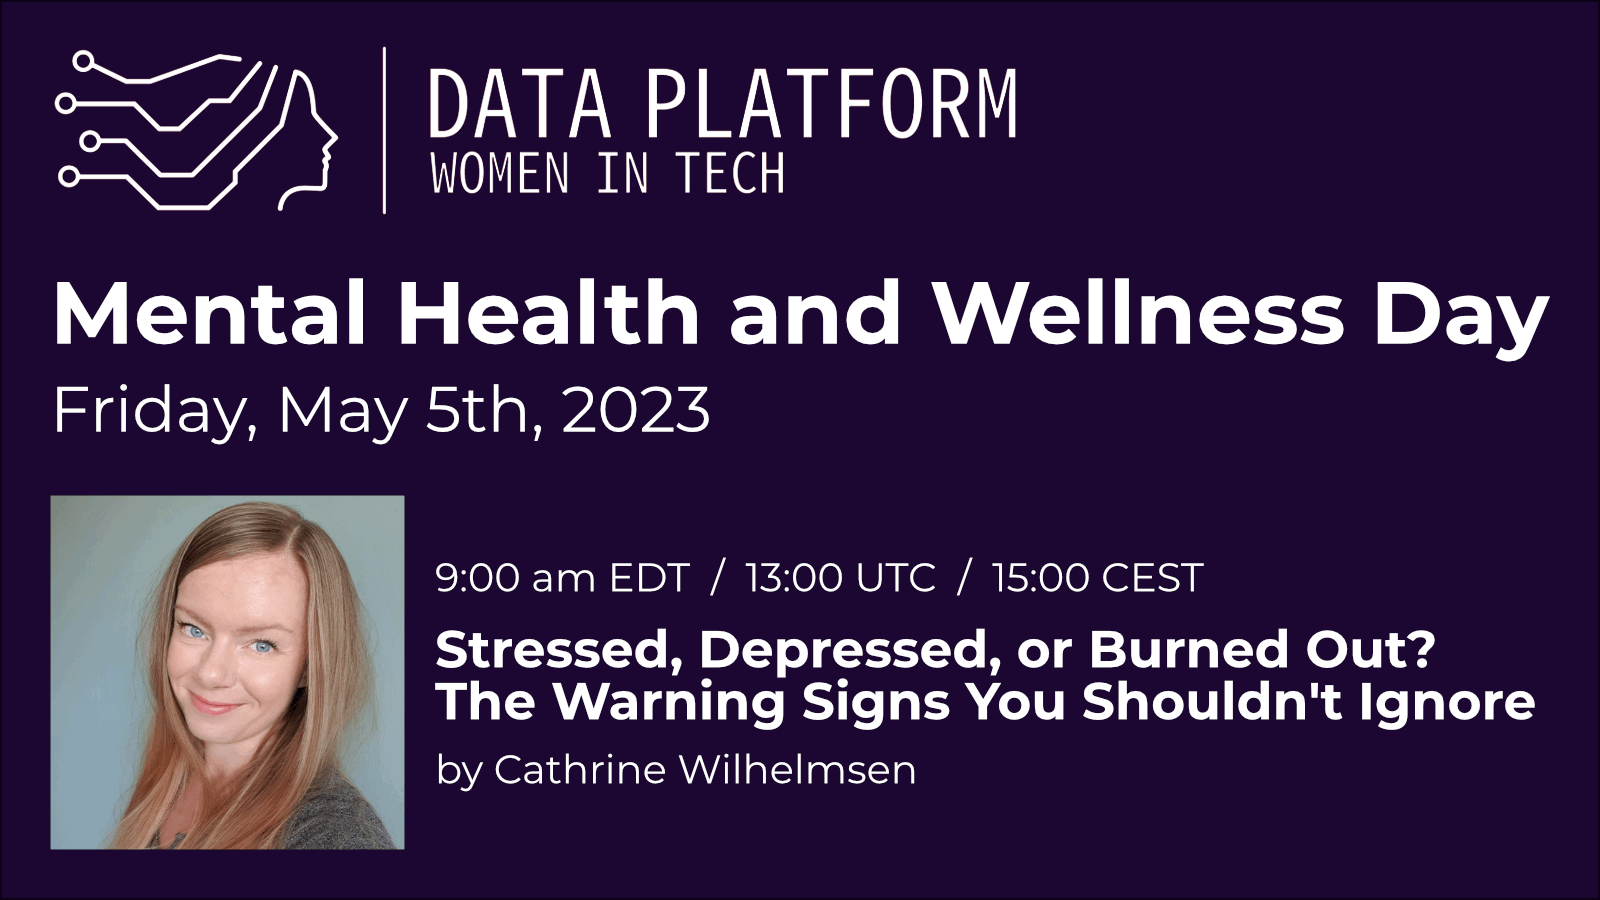 Speaker card showing Cathrine Wilhelmsen presenting at Data Platform WIT/DEI Mental Health and Wellness Day 2023.